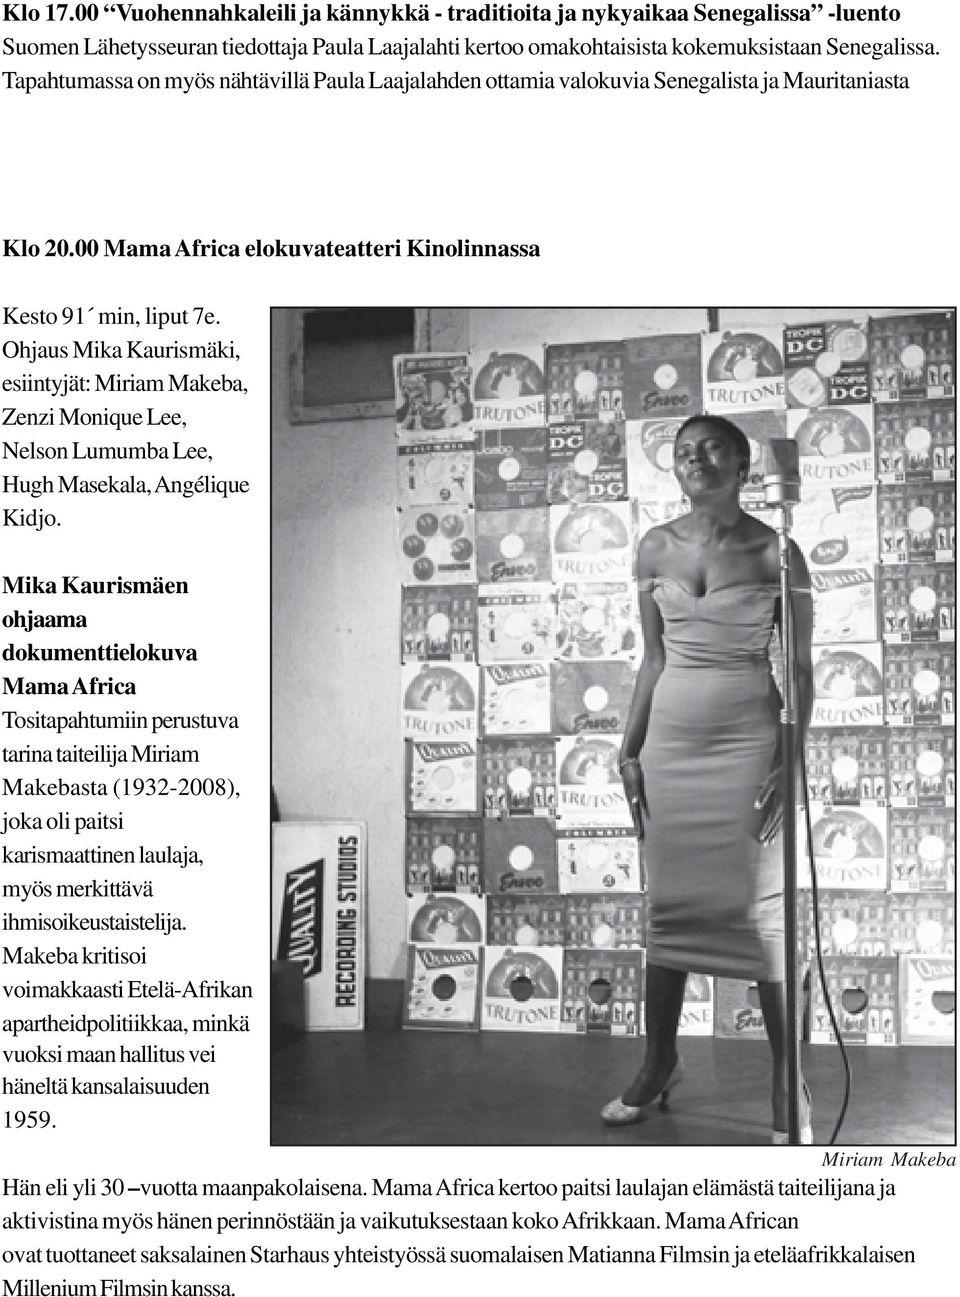 Ohjaus Mika Kaurismäki, esiintyjät: Miriam Makeba, Zenzi Monique Lee, Nelson Lumumba Lee, Hugh Masekala, Angélique Kidjo.